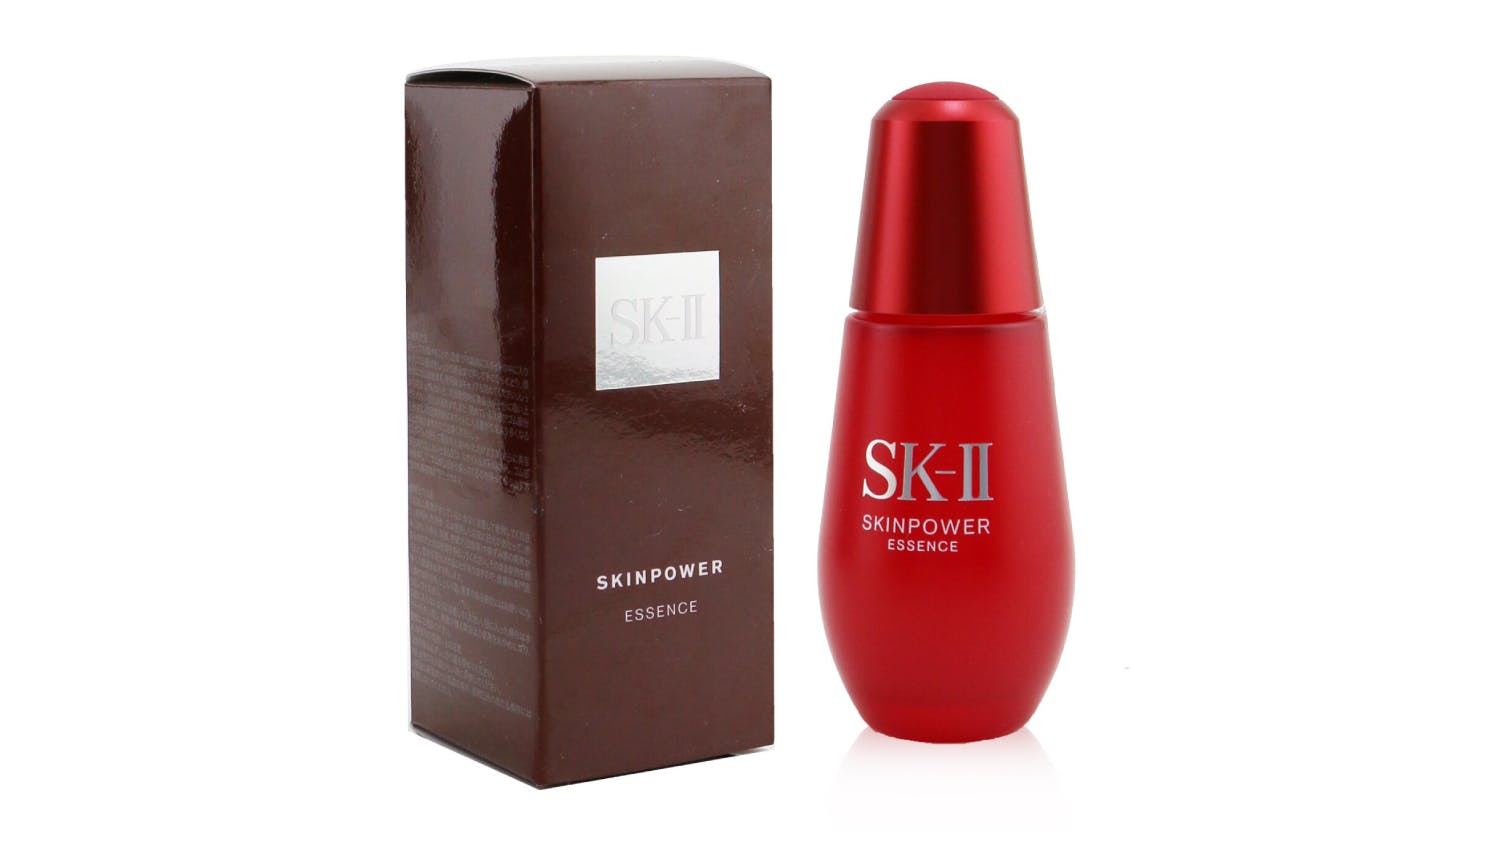 SK II Skinpower Essence - 50ml/1.6oz"